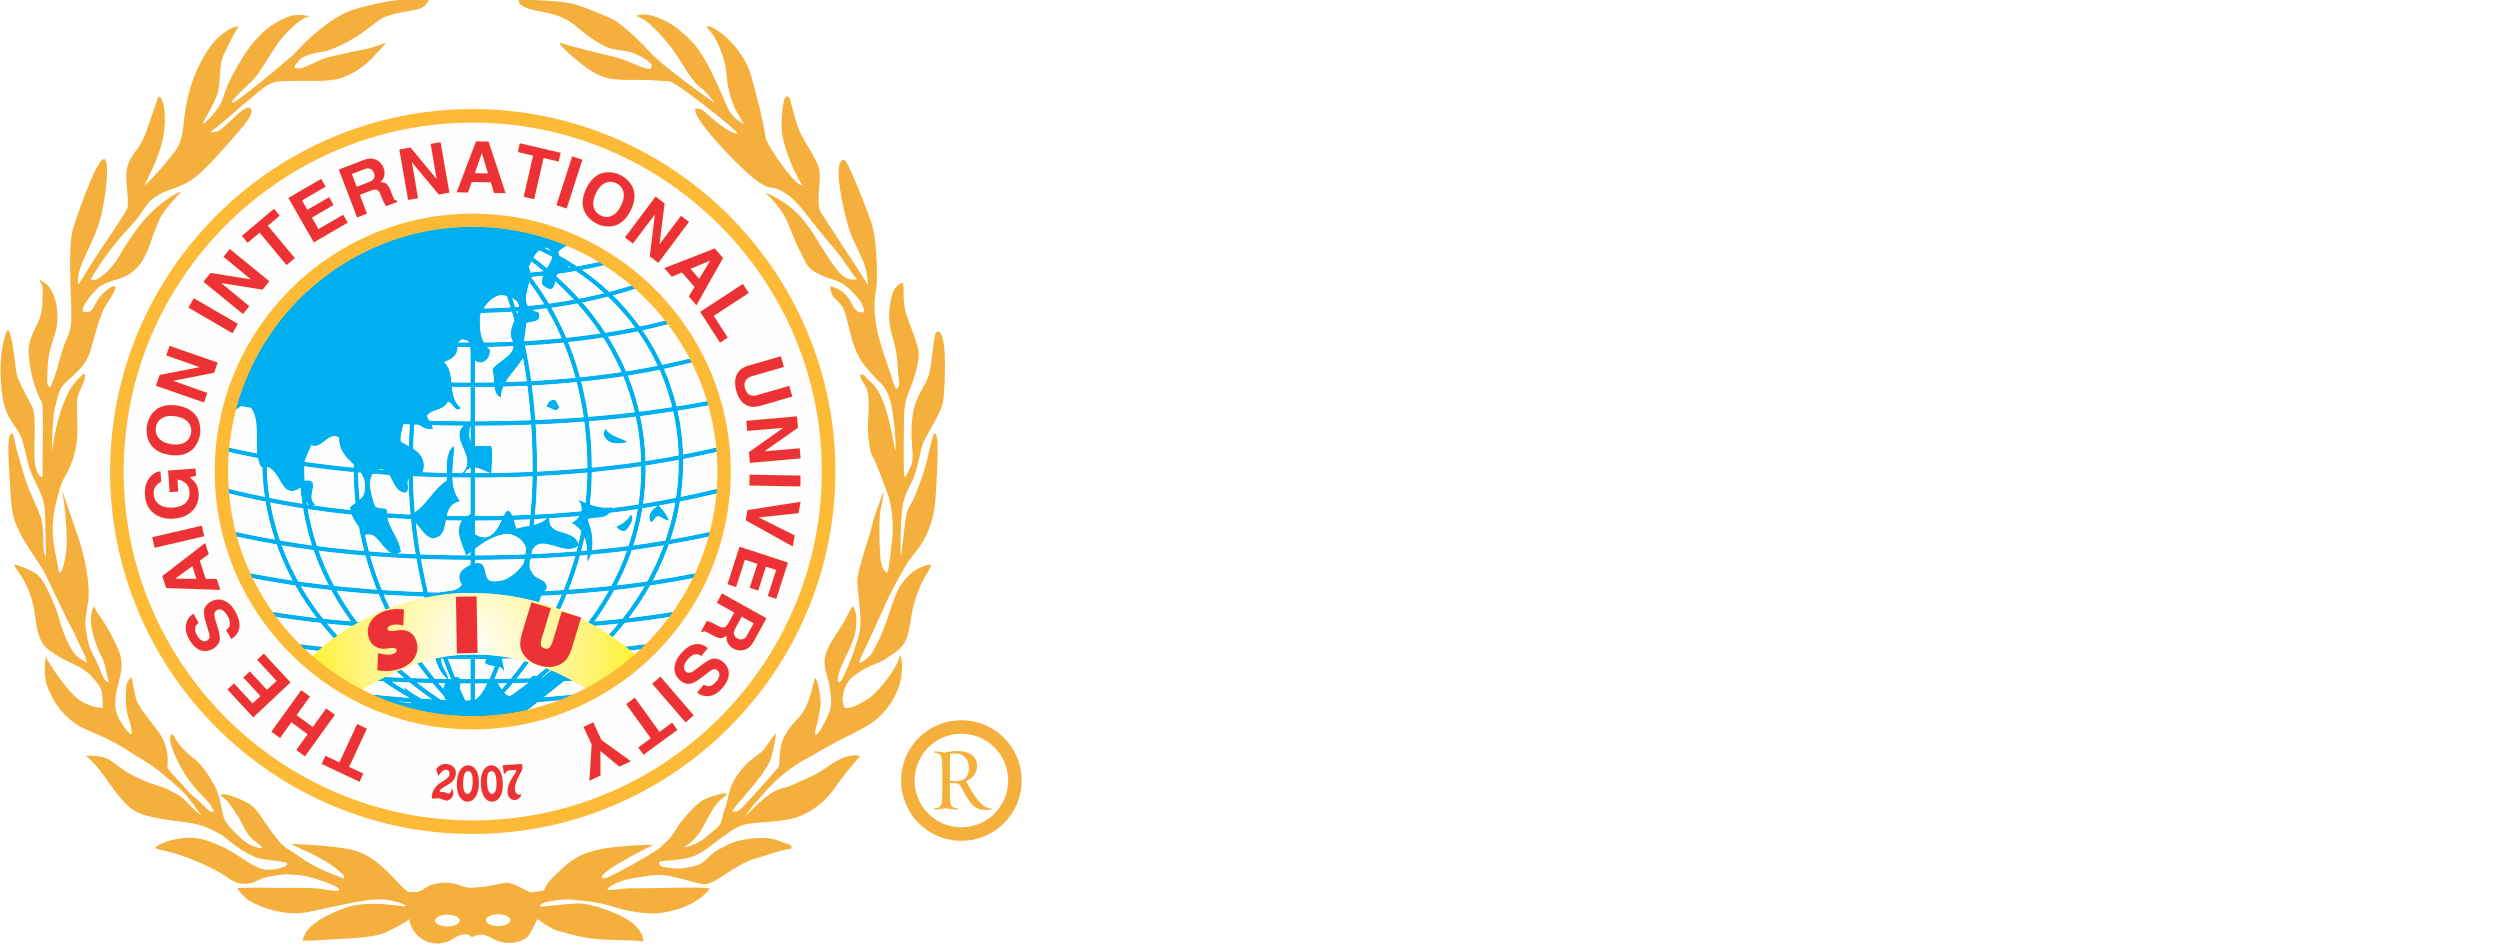 The Saigon International University